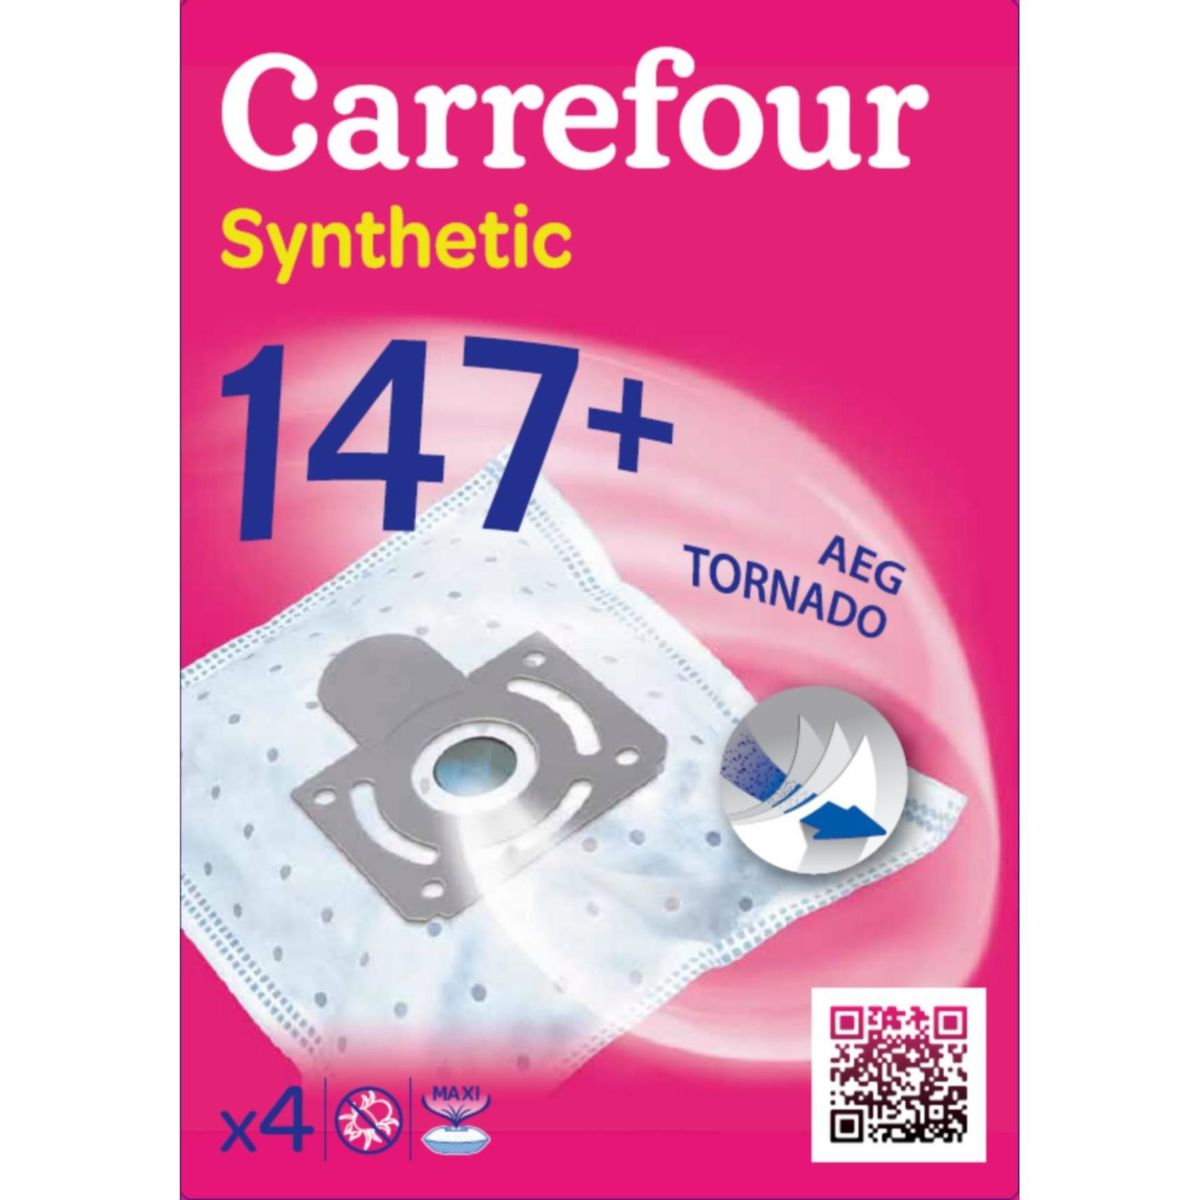 Carrefour - NR147+ Sacs aspirateur